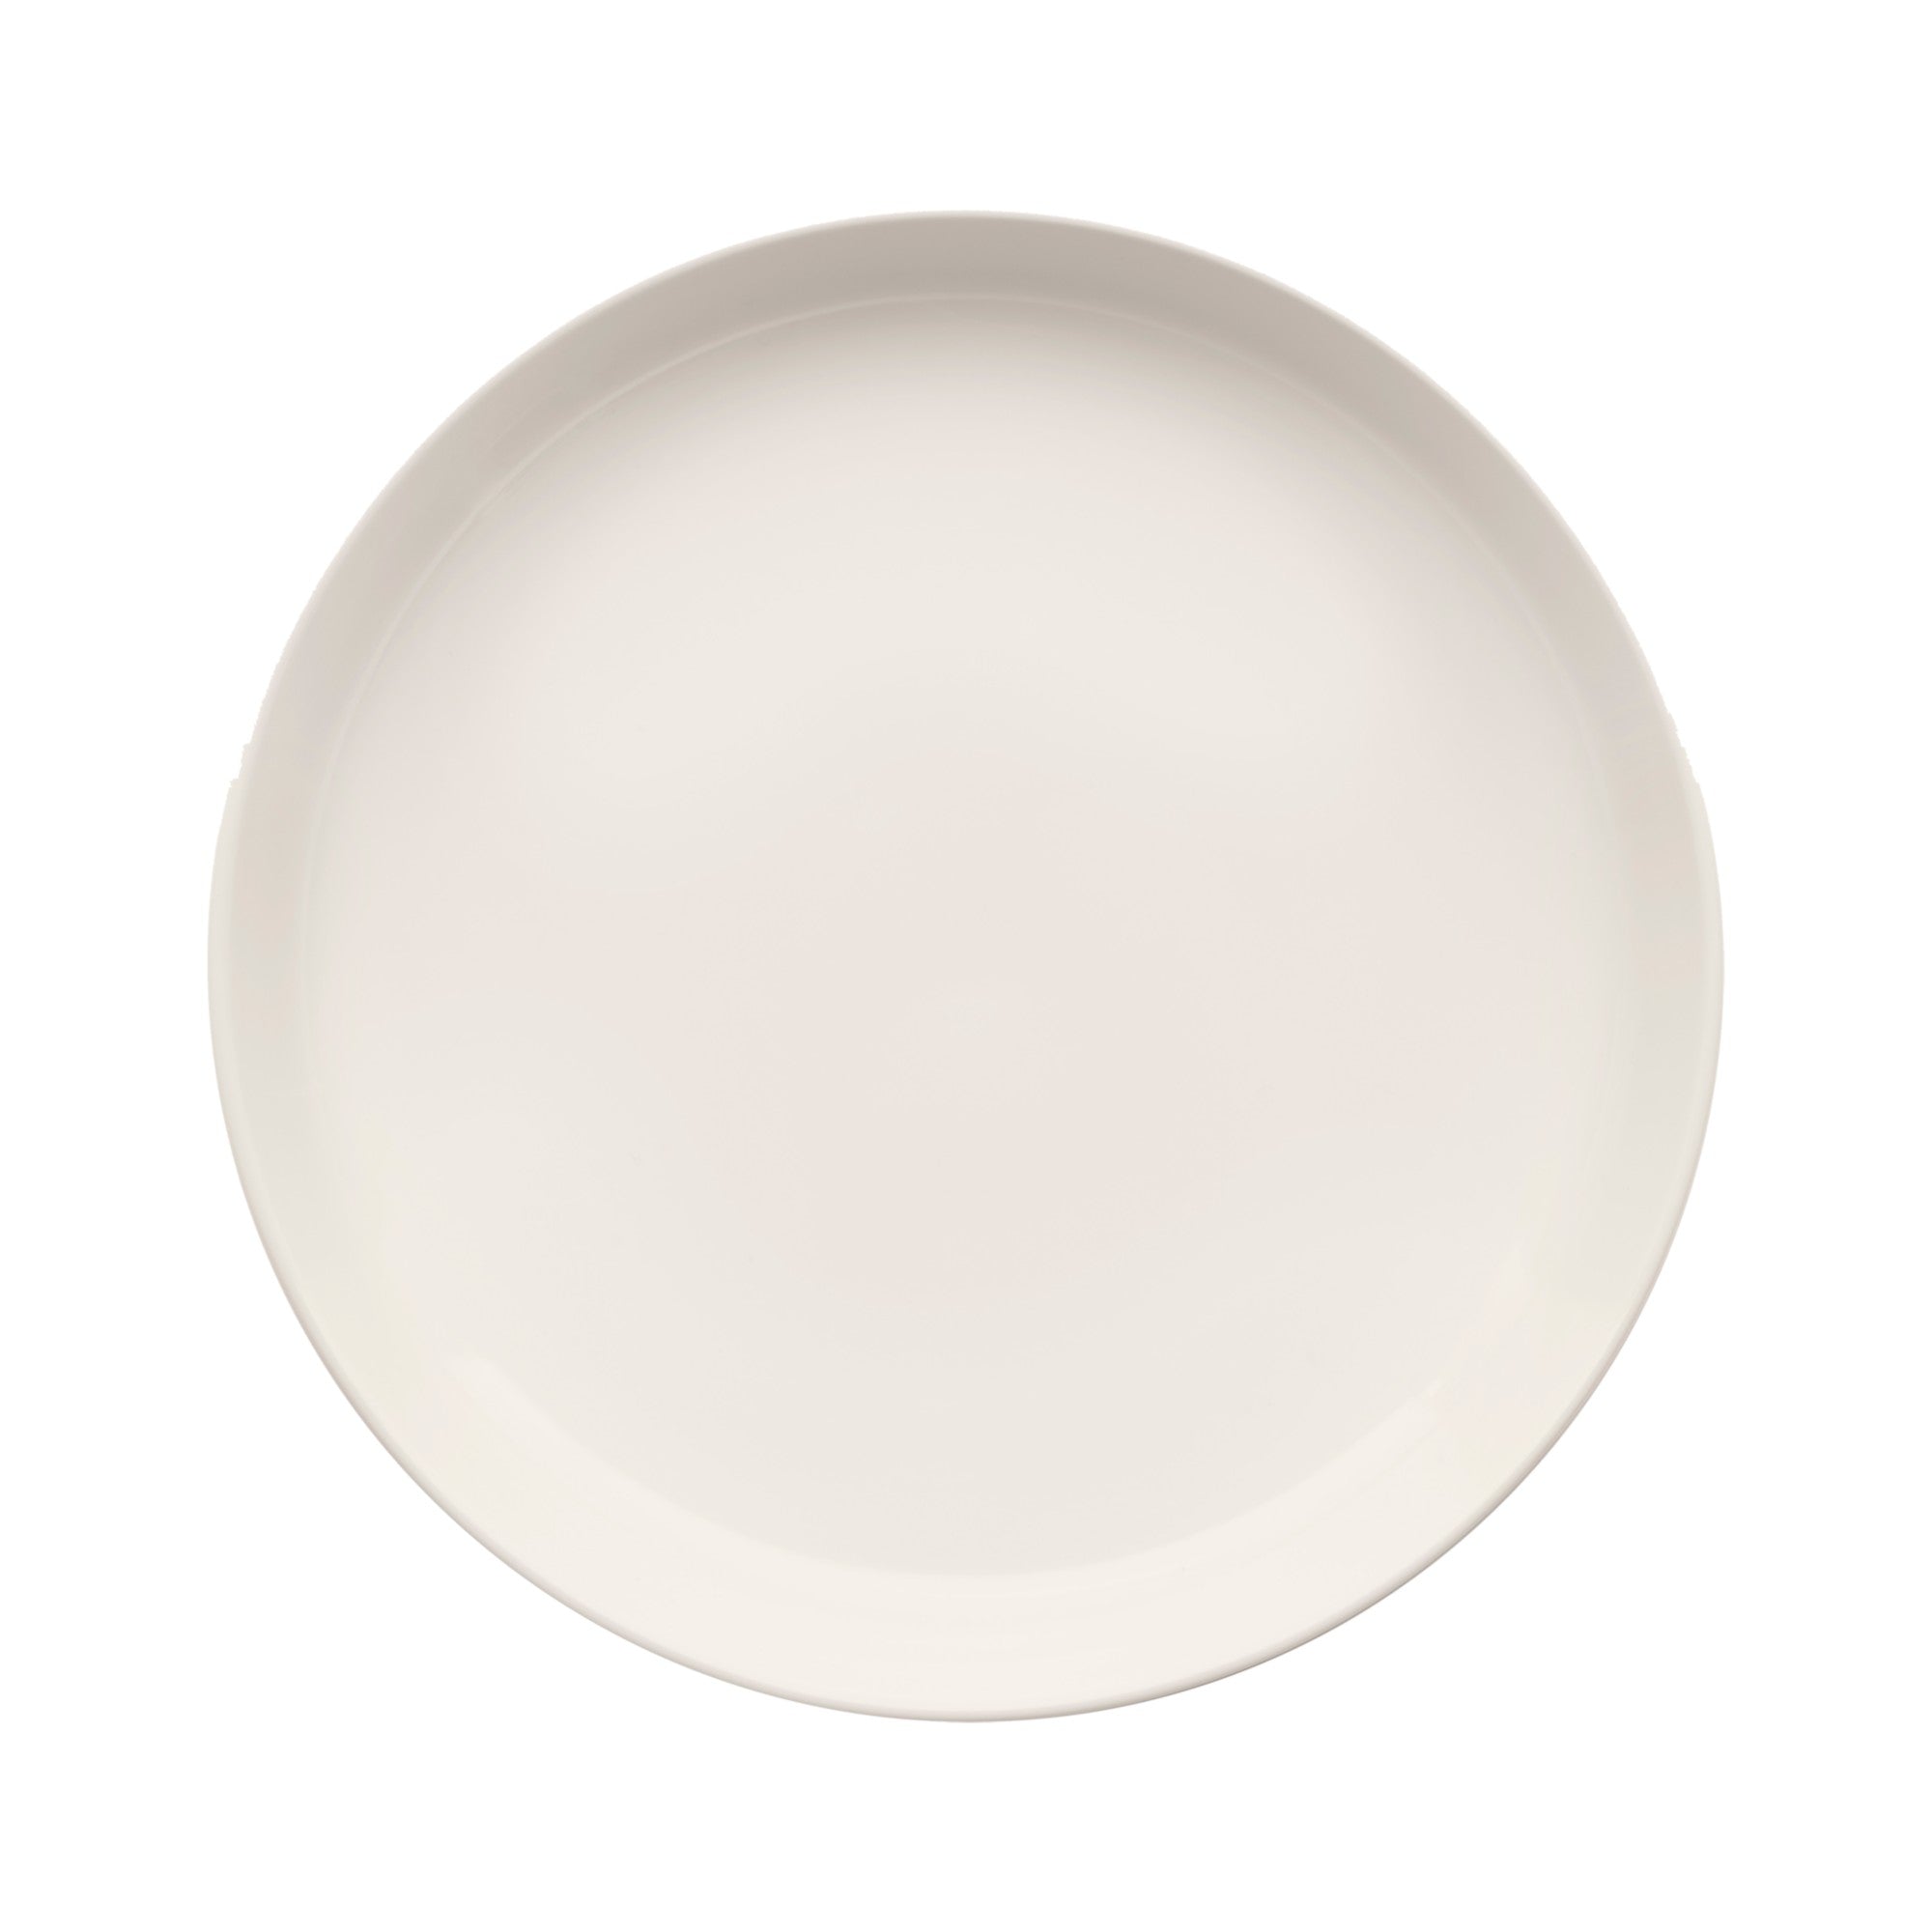 Essence plate oval 25 cm / 10"